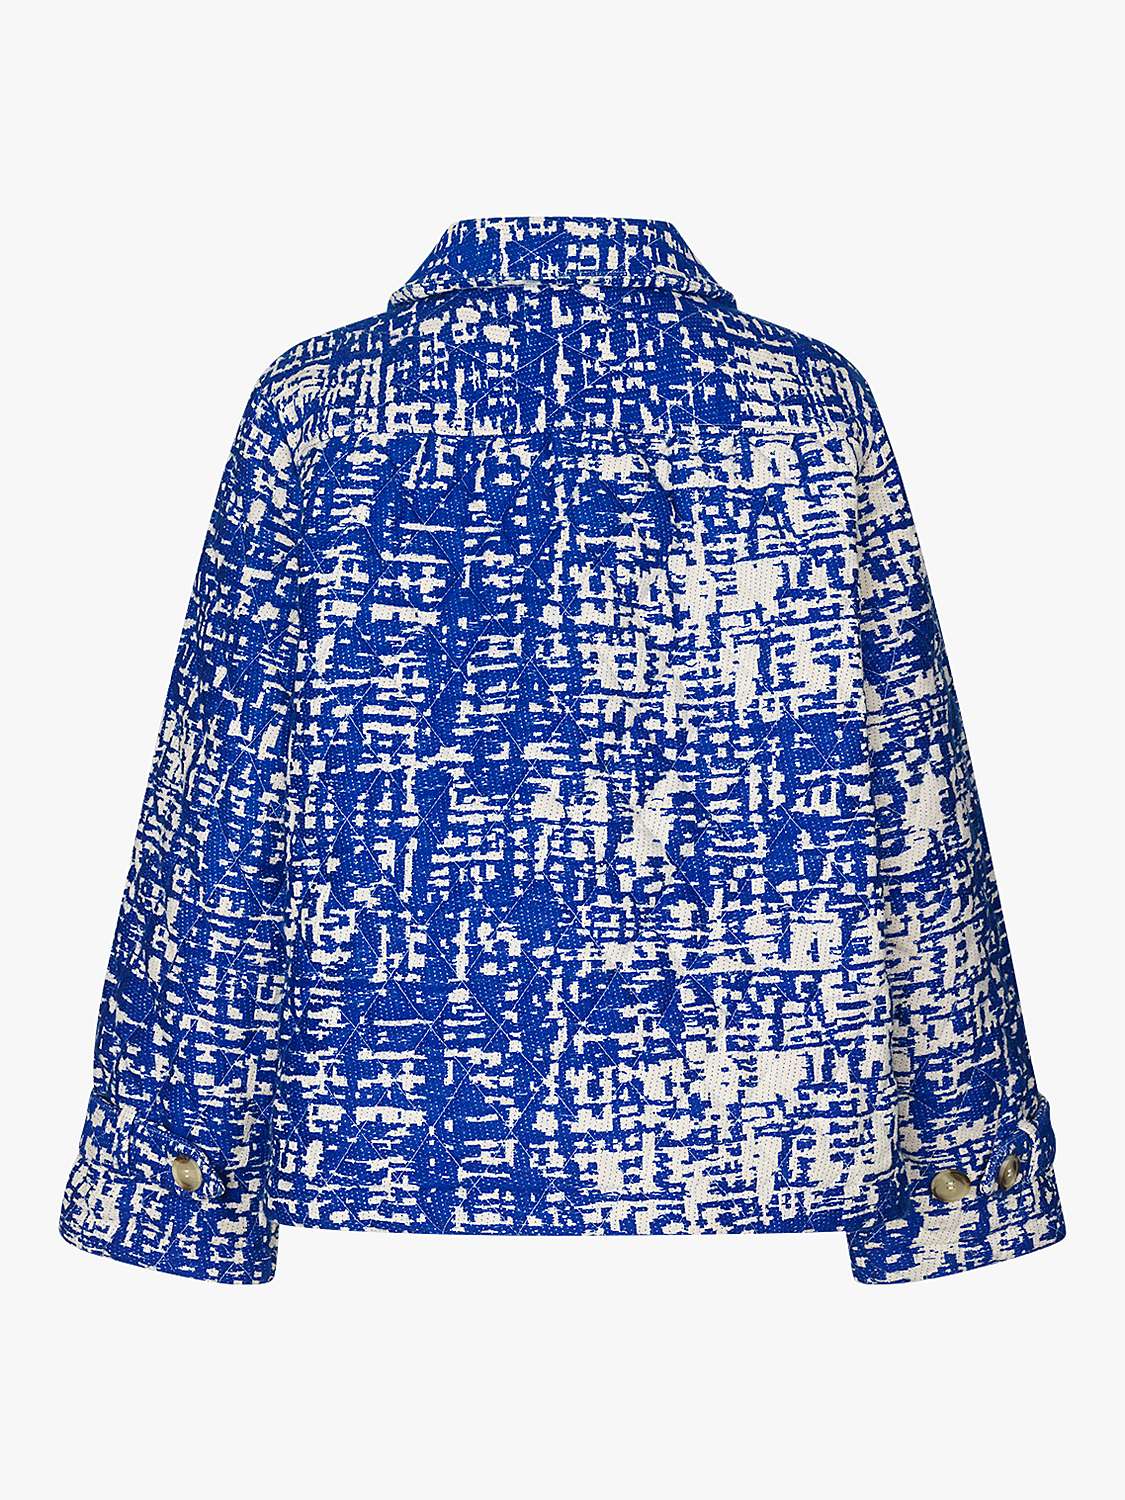 Buy Lollys Laundry Viola Short Jacket, Blue/White Online at johnlewis.com